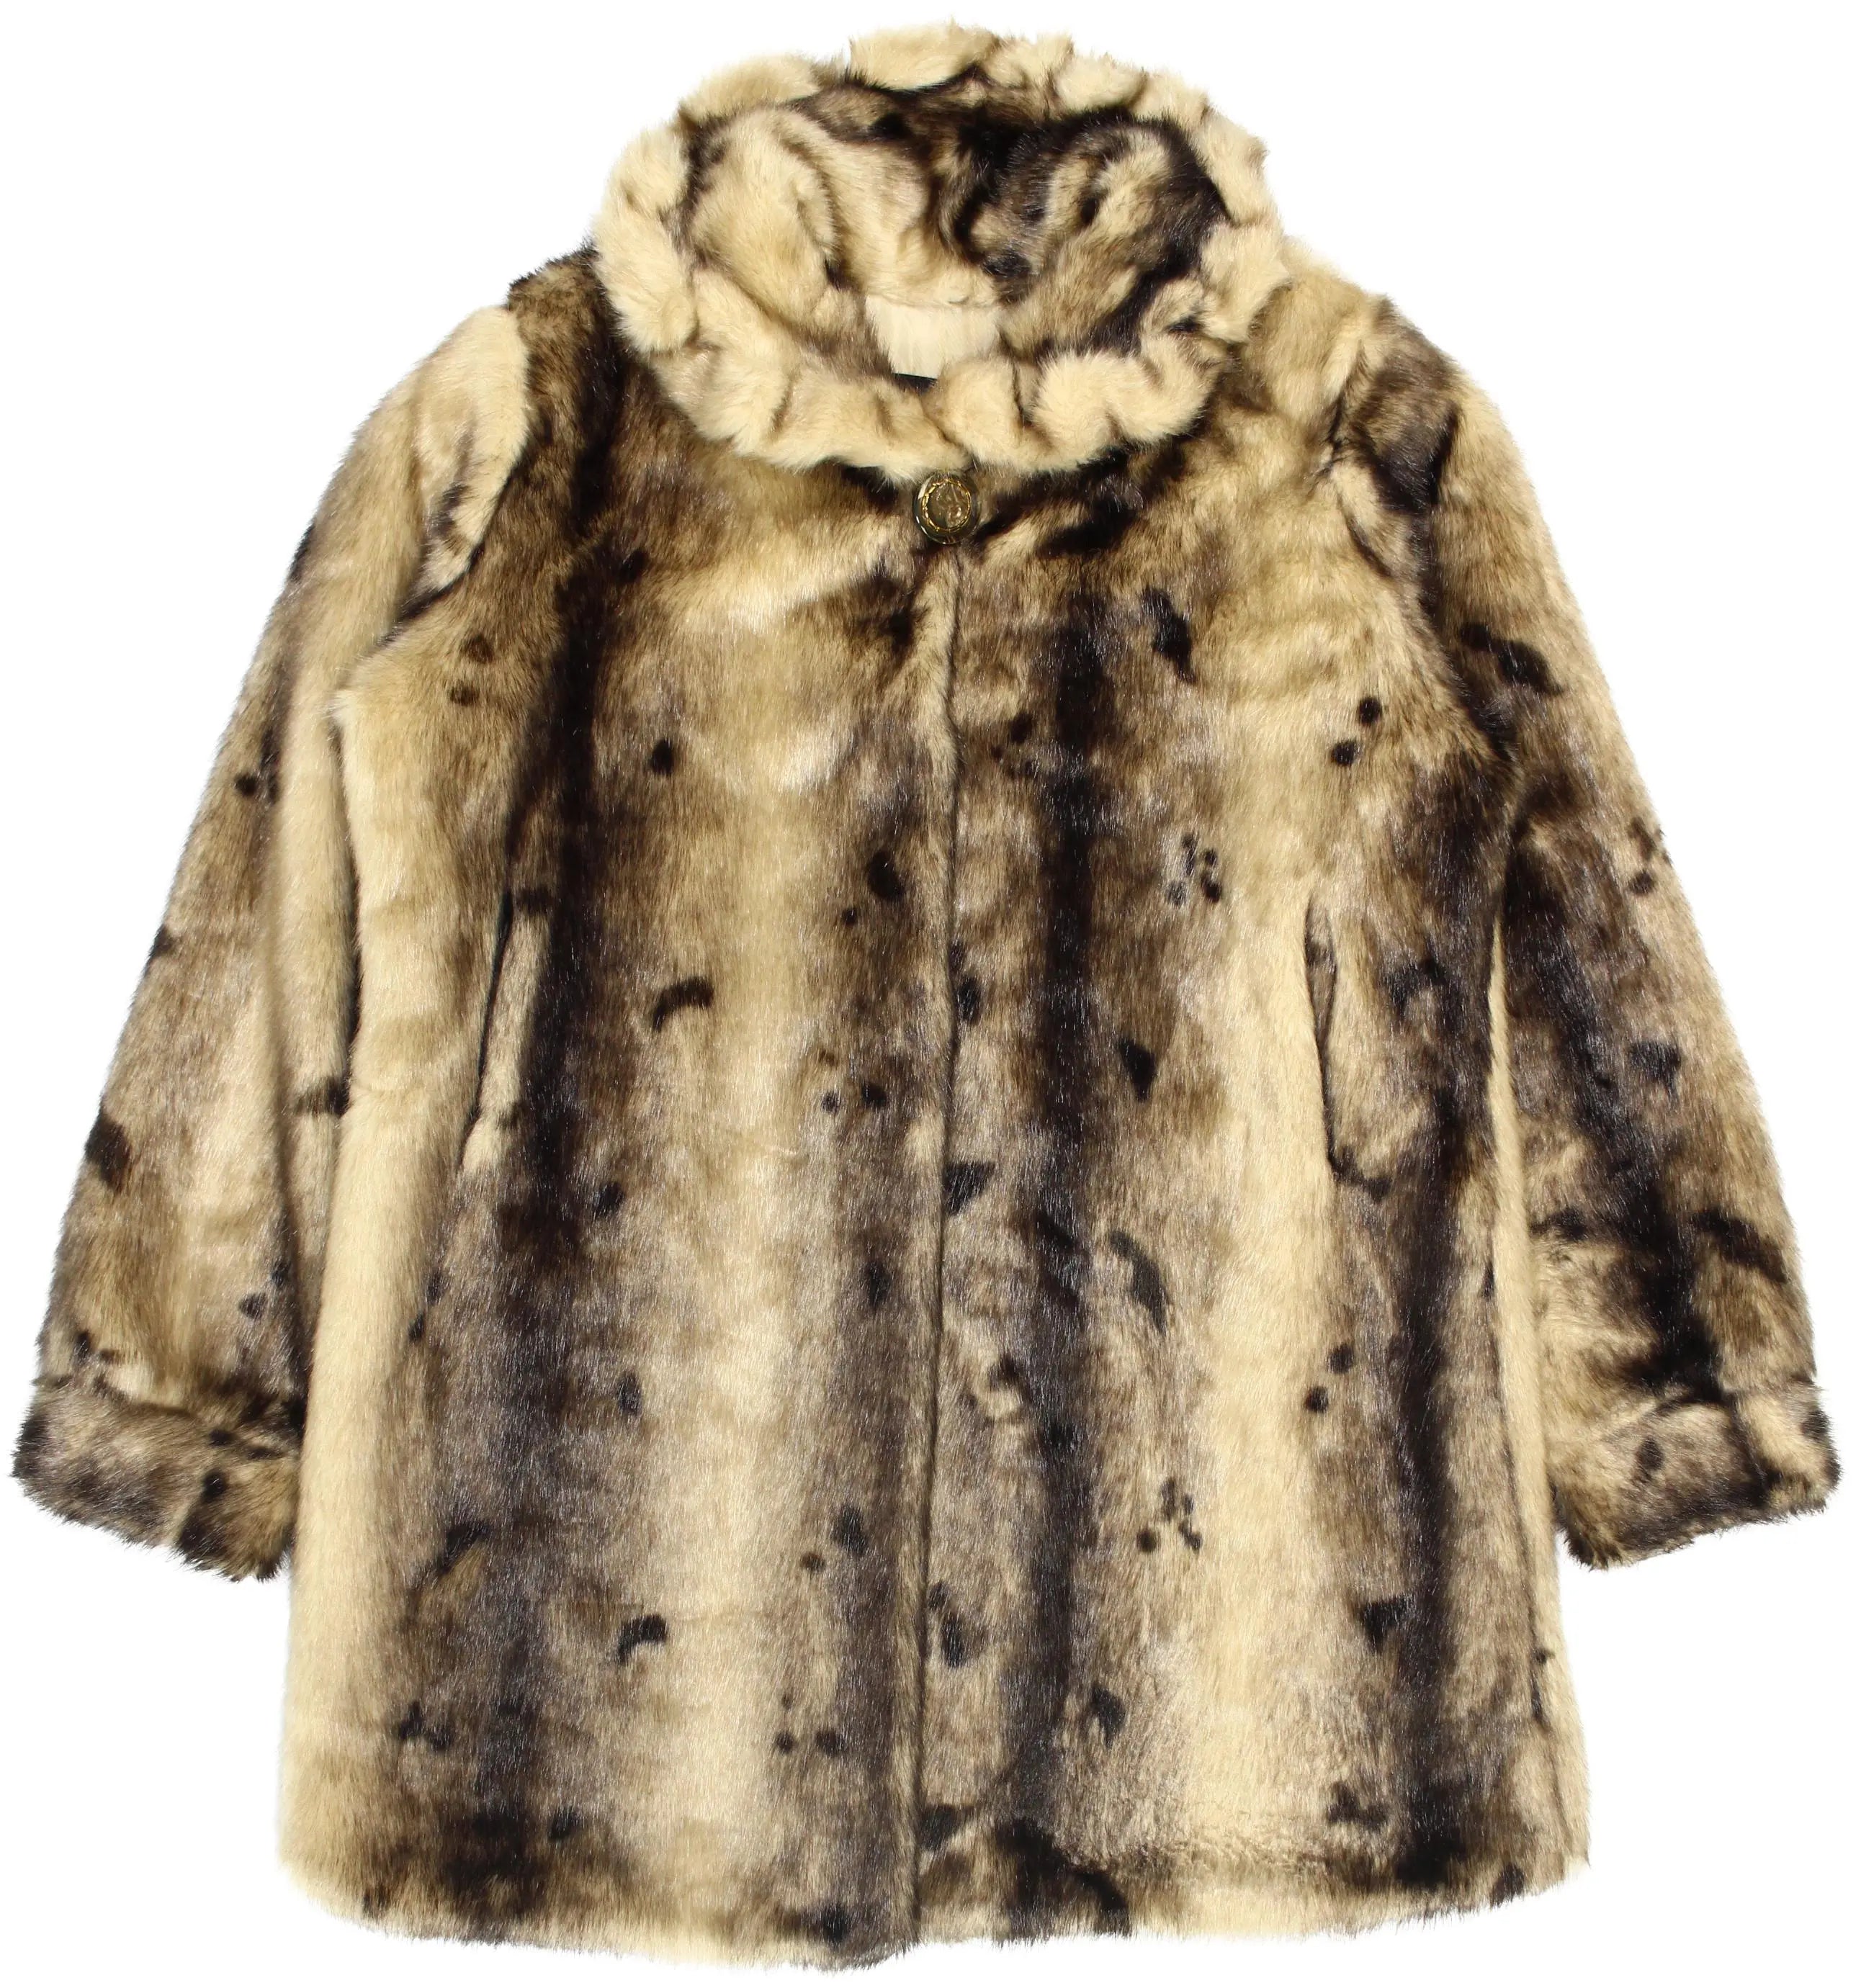 Conos - Faux Fur Coat- ThriftTale.com - Vintage and second handclothing